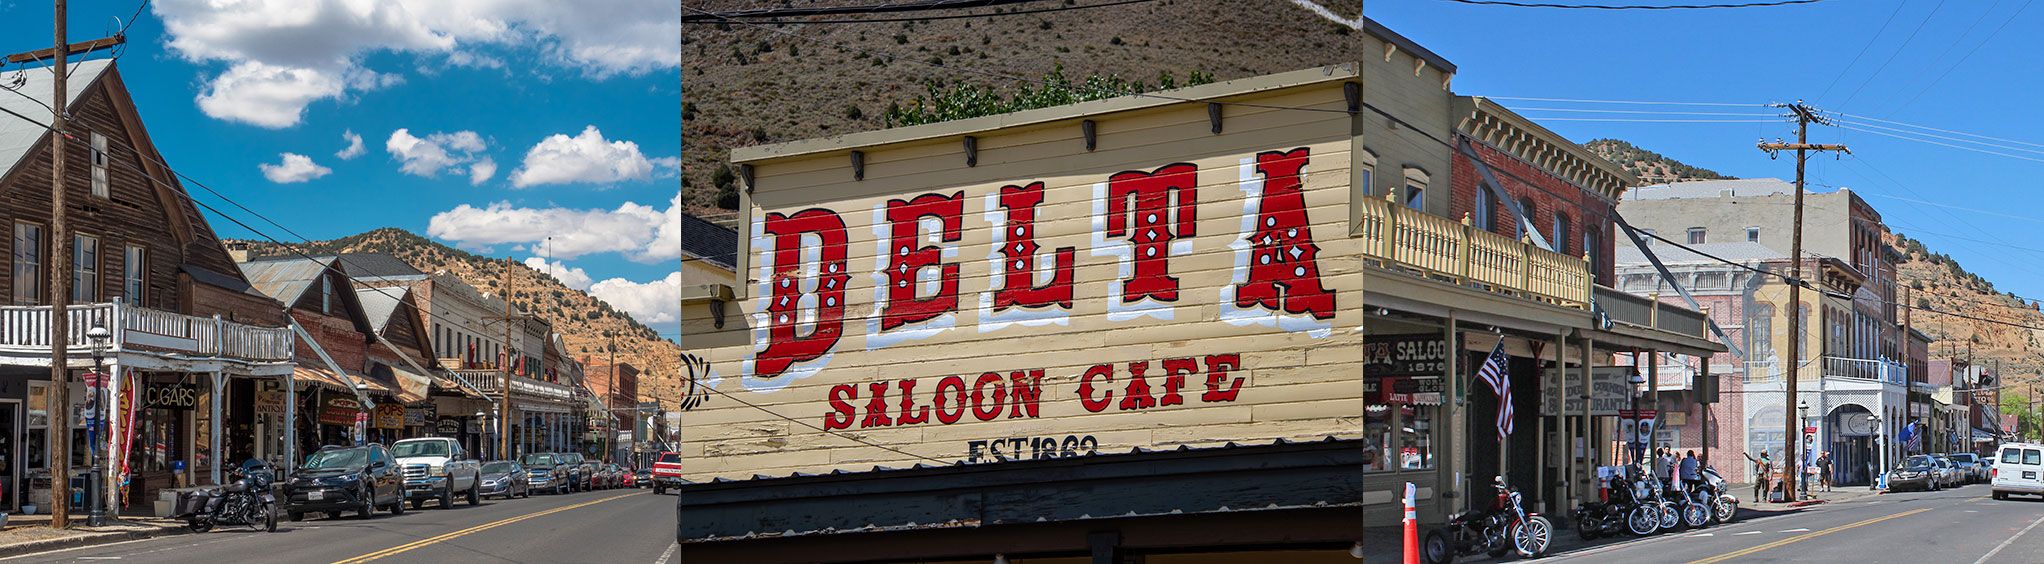 The Delta Saloon in Virginia City, NV